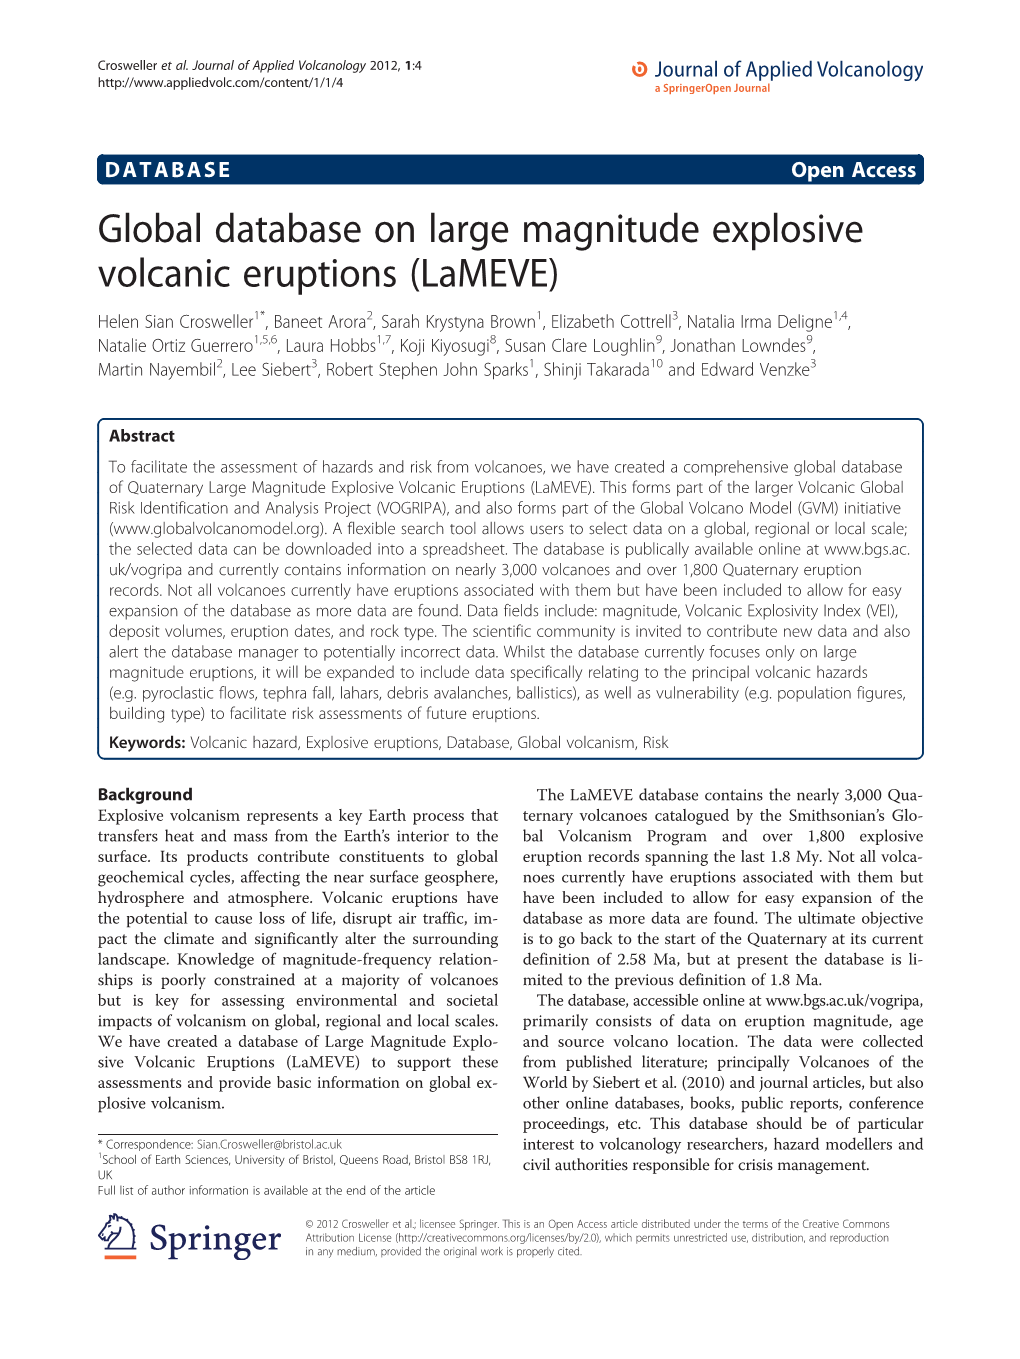 Global Database on Large Magnitude Explosive Volcanic Eruptions